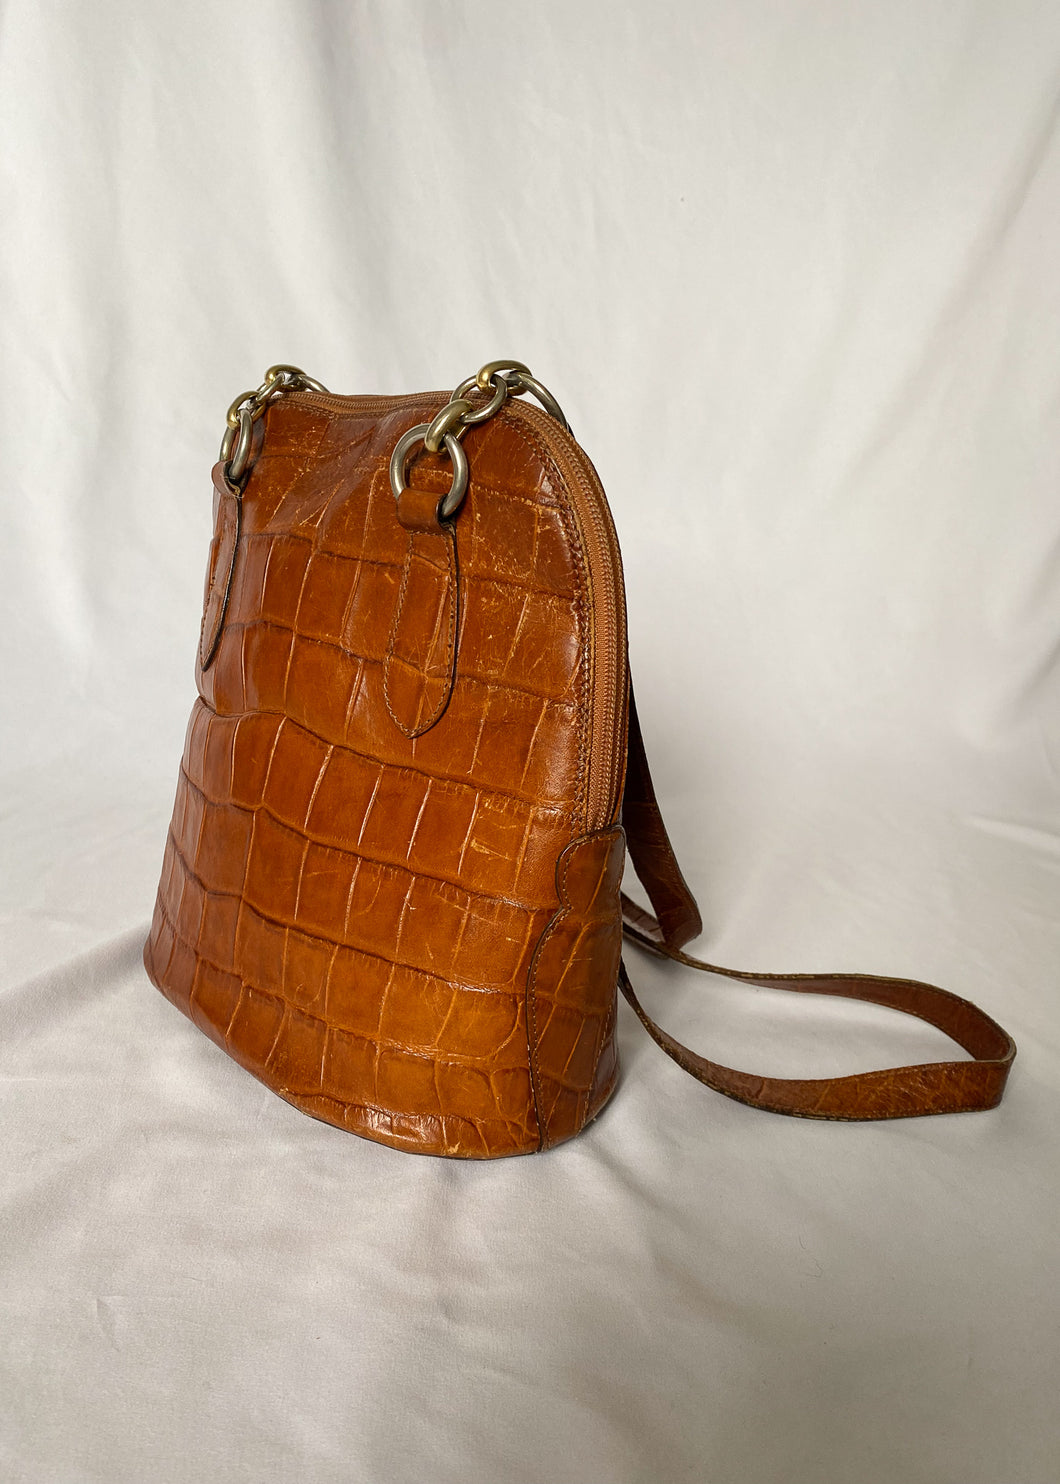 Vintage Brown Croc Print Leather Purse